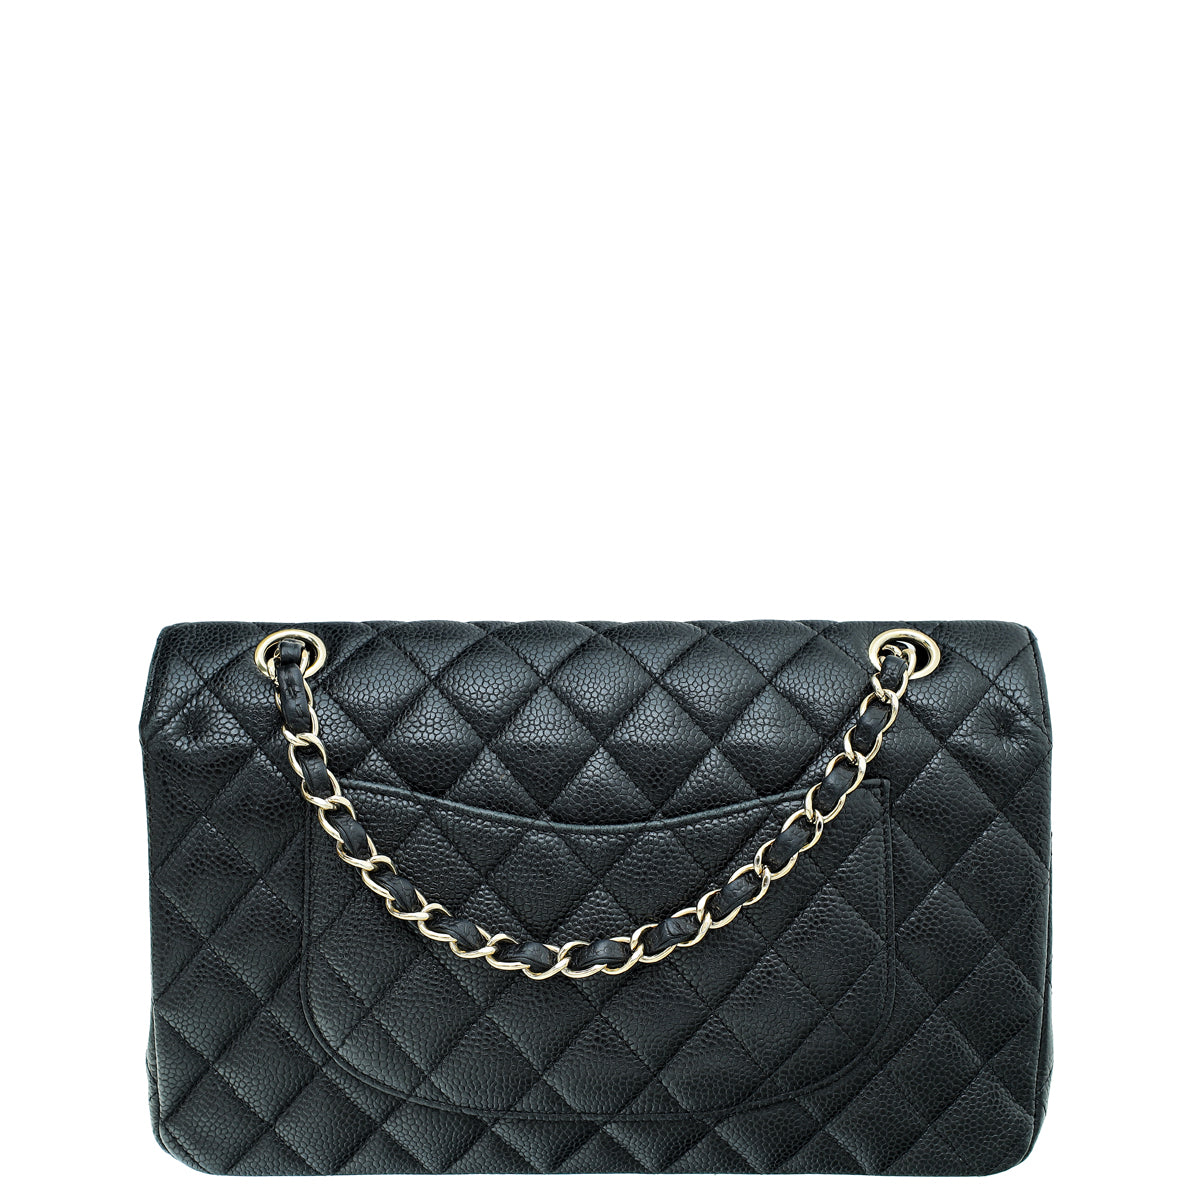 Chanel Black Classic Double Flap Medium Bag